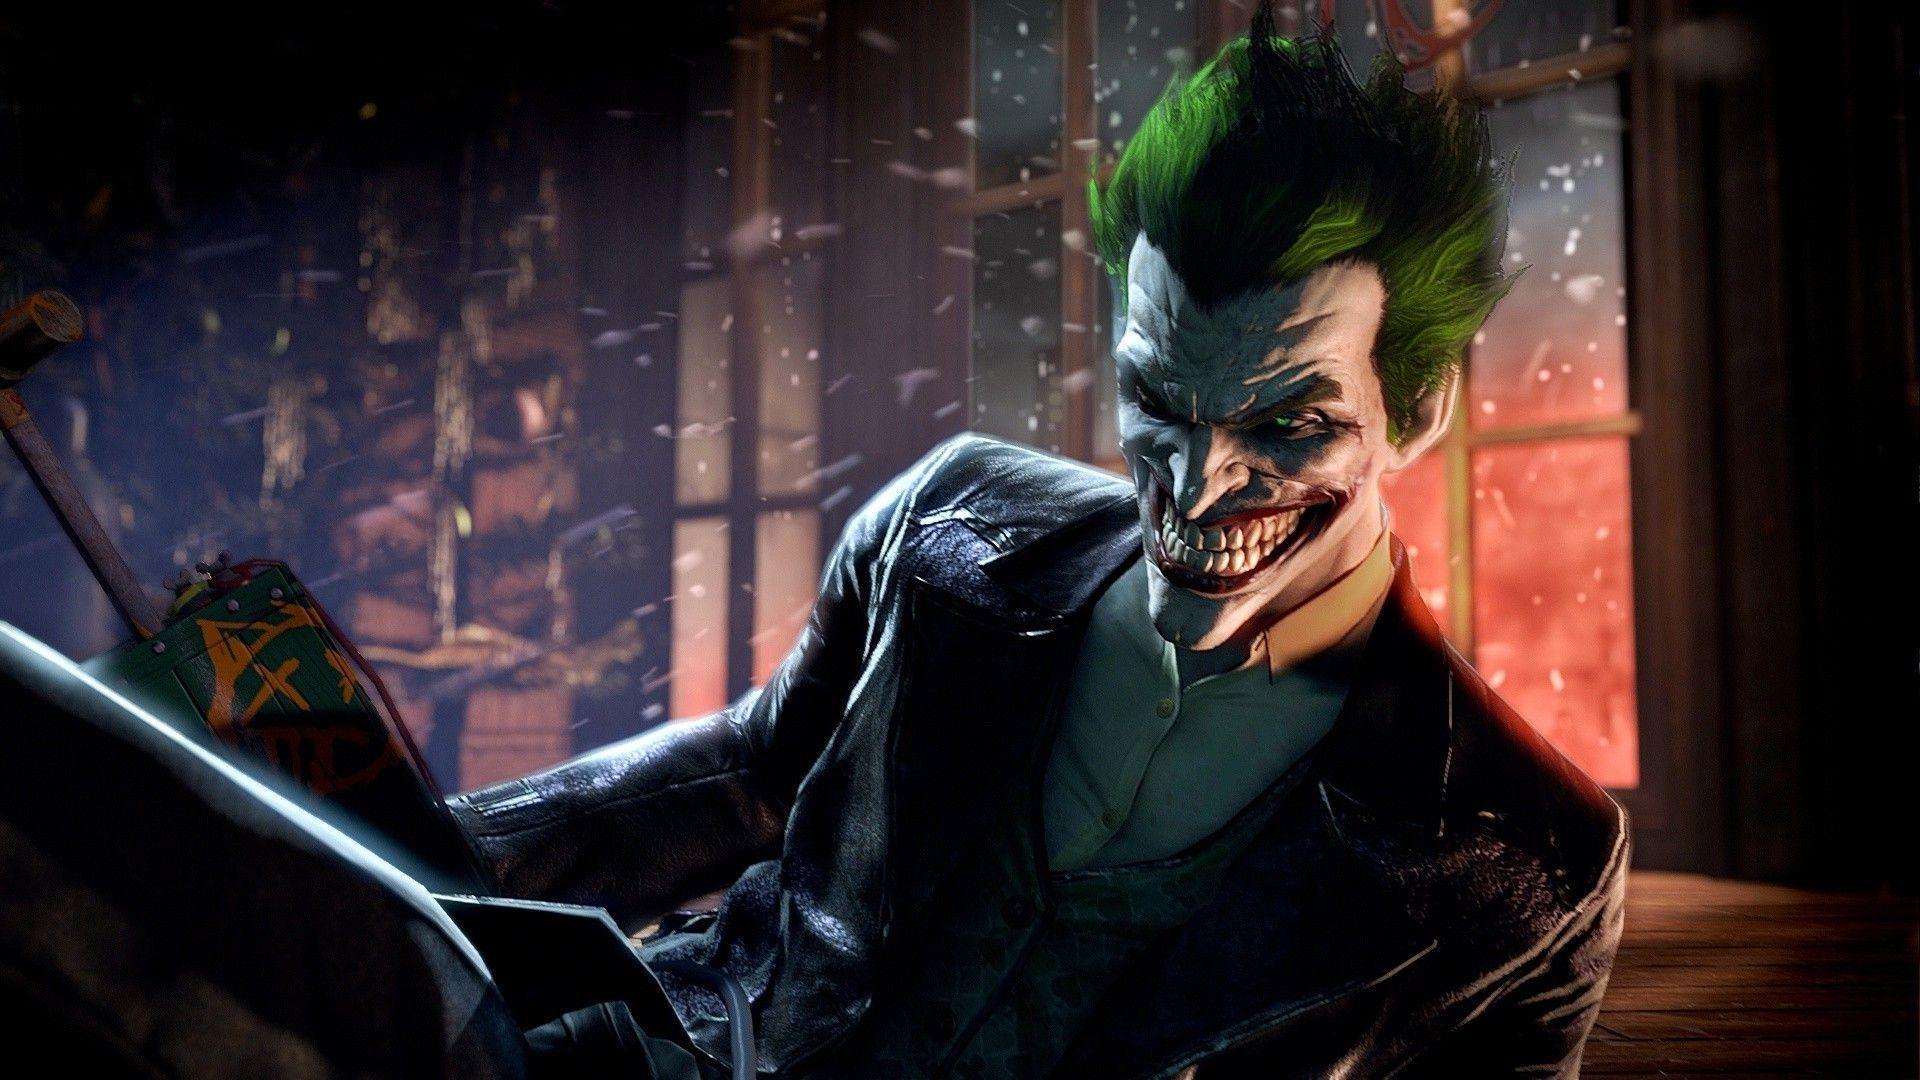 Joker Arkham Origins Wallpapers - Top Free Joker Arkham Origins ...